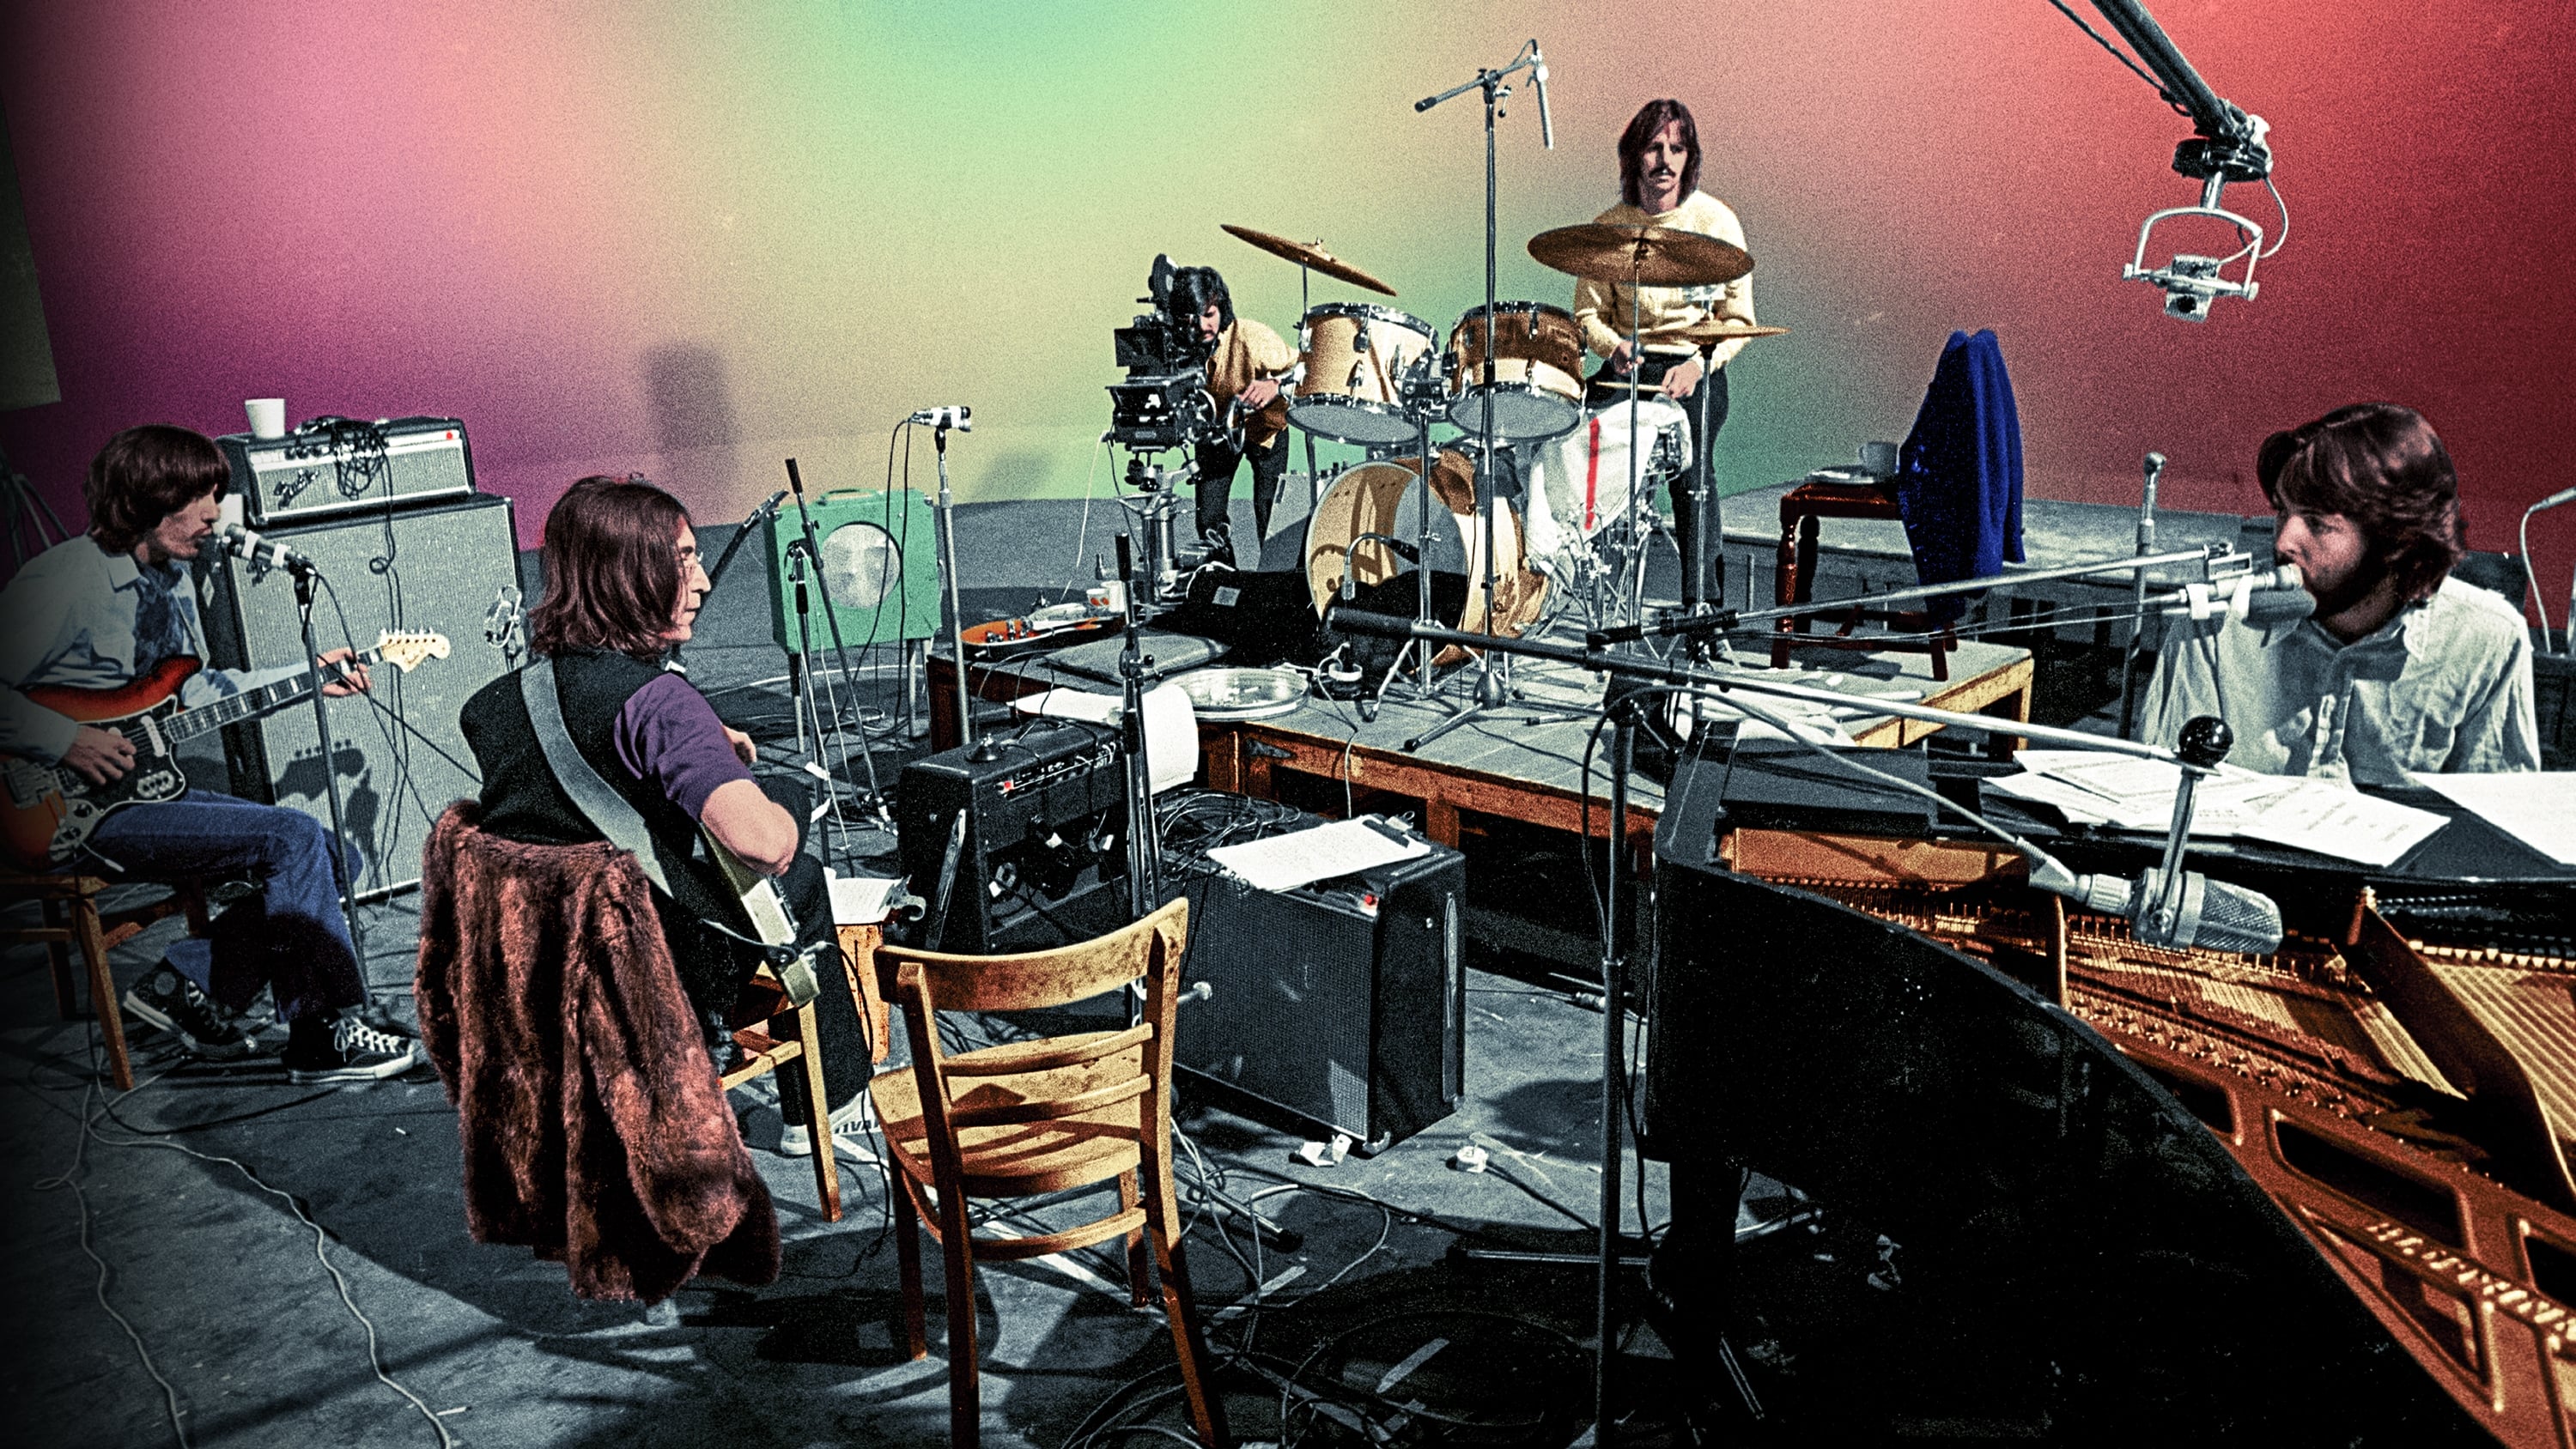 Voir The Beatles - Get Back streaming